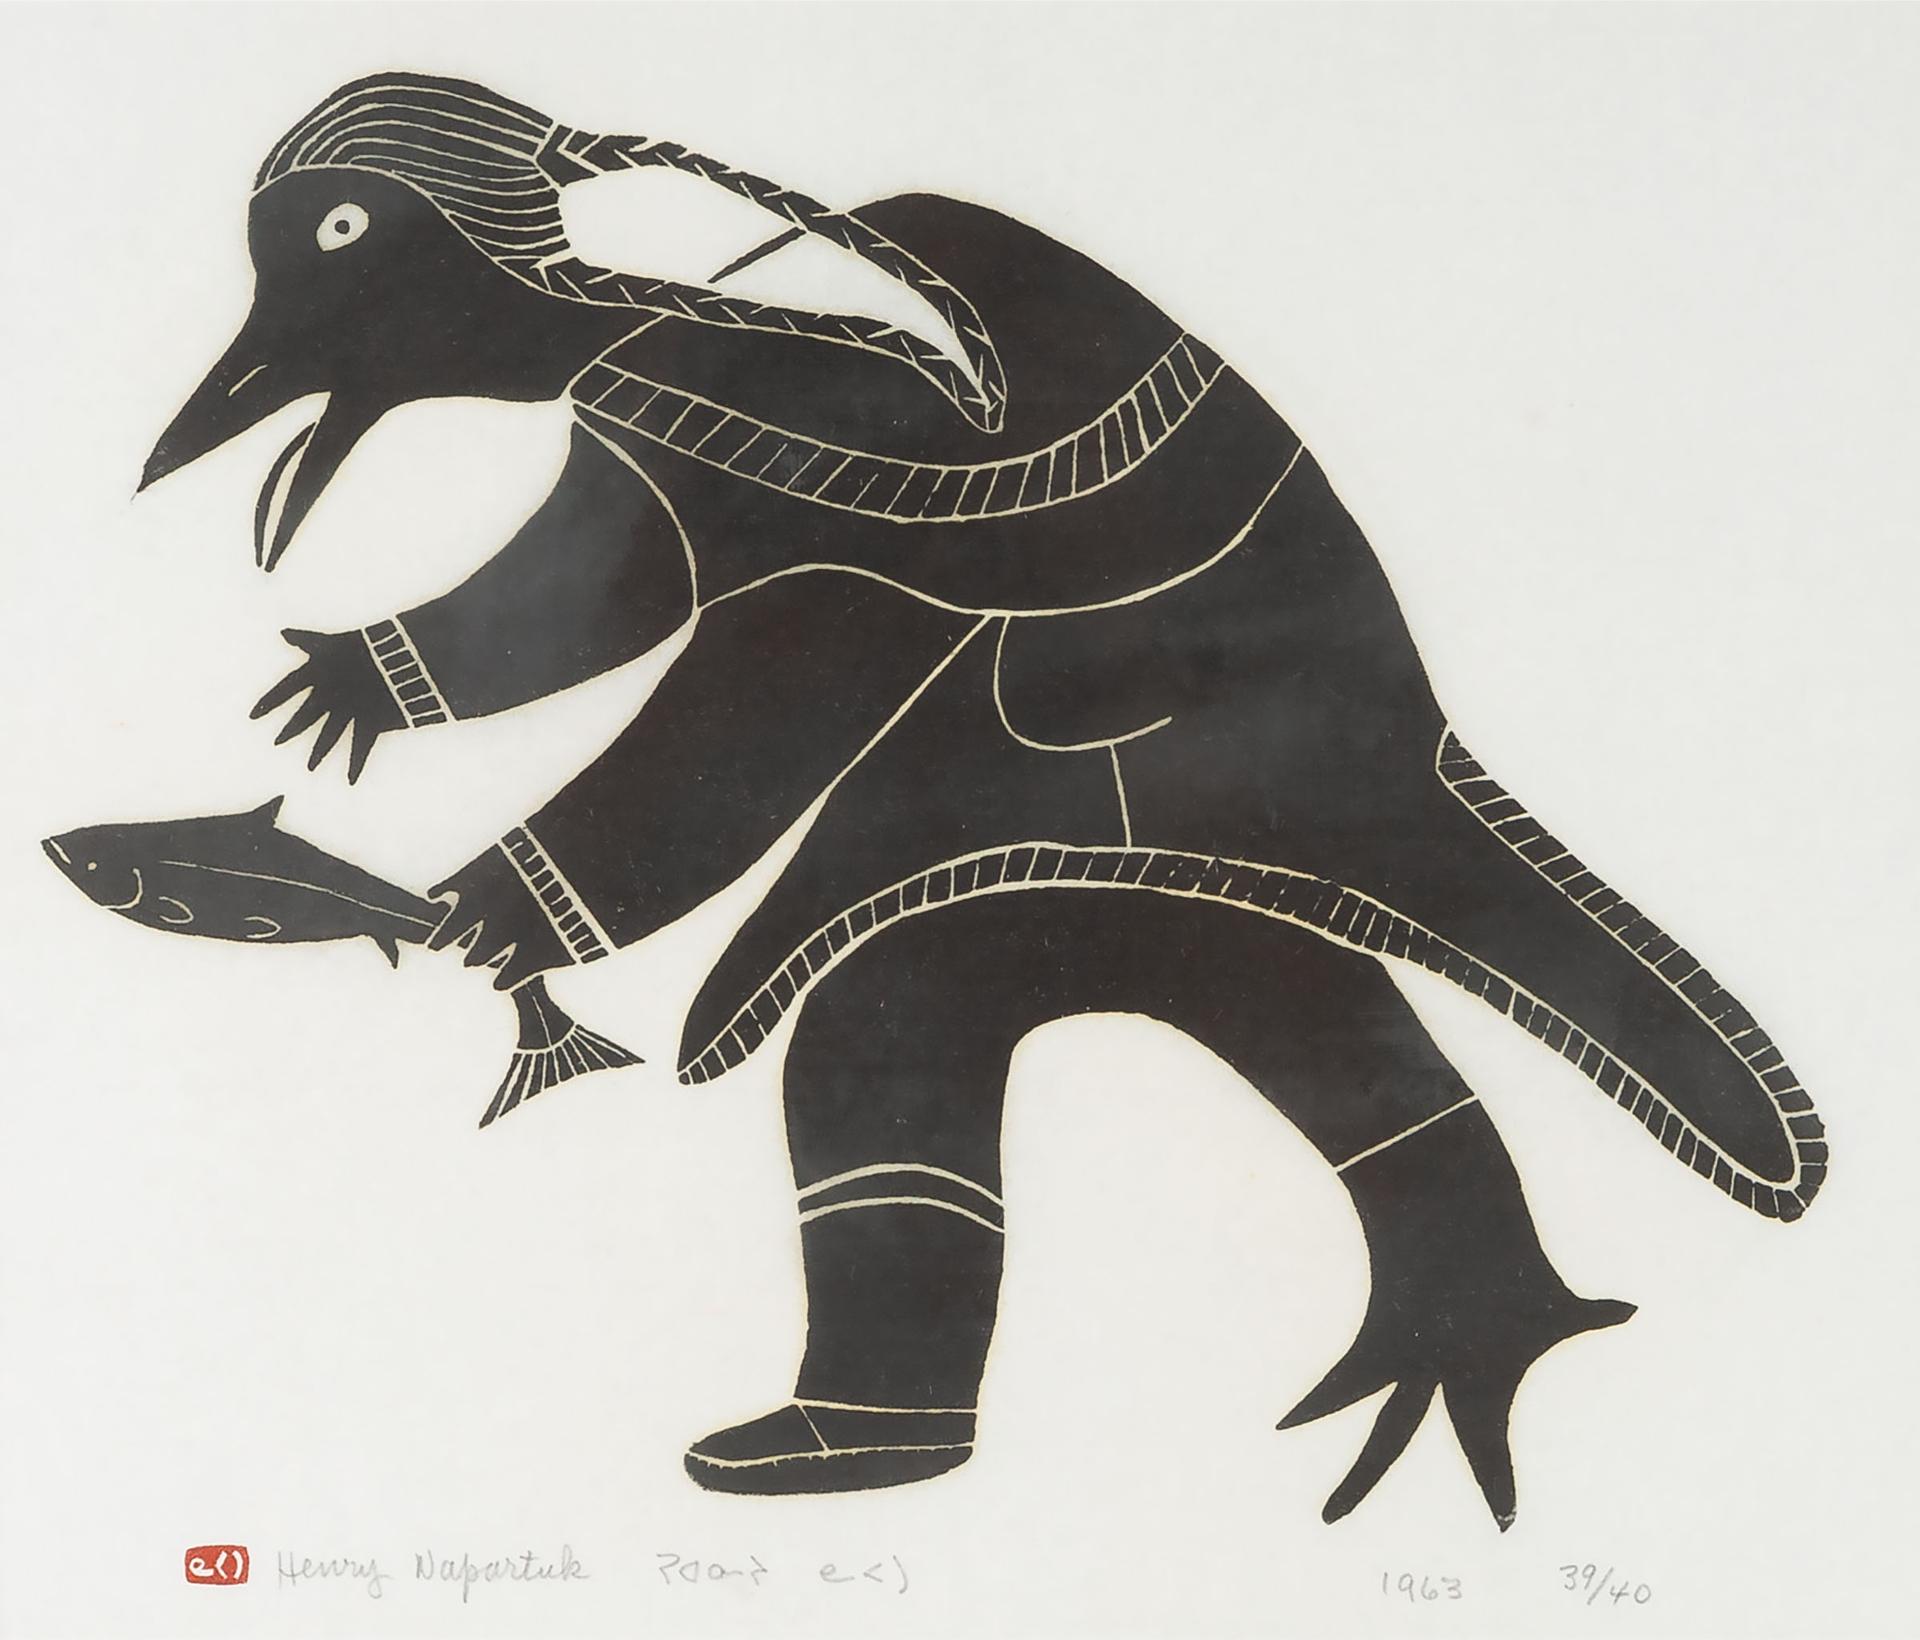 Henry Napartuk (1932-1985) - Transforming Raven With Fish